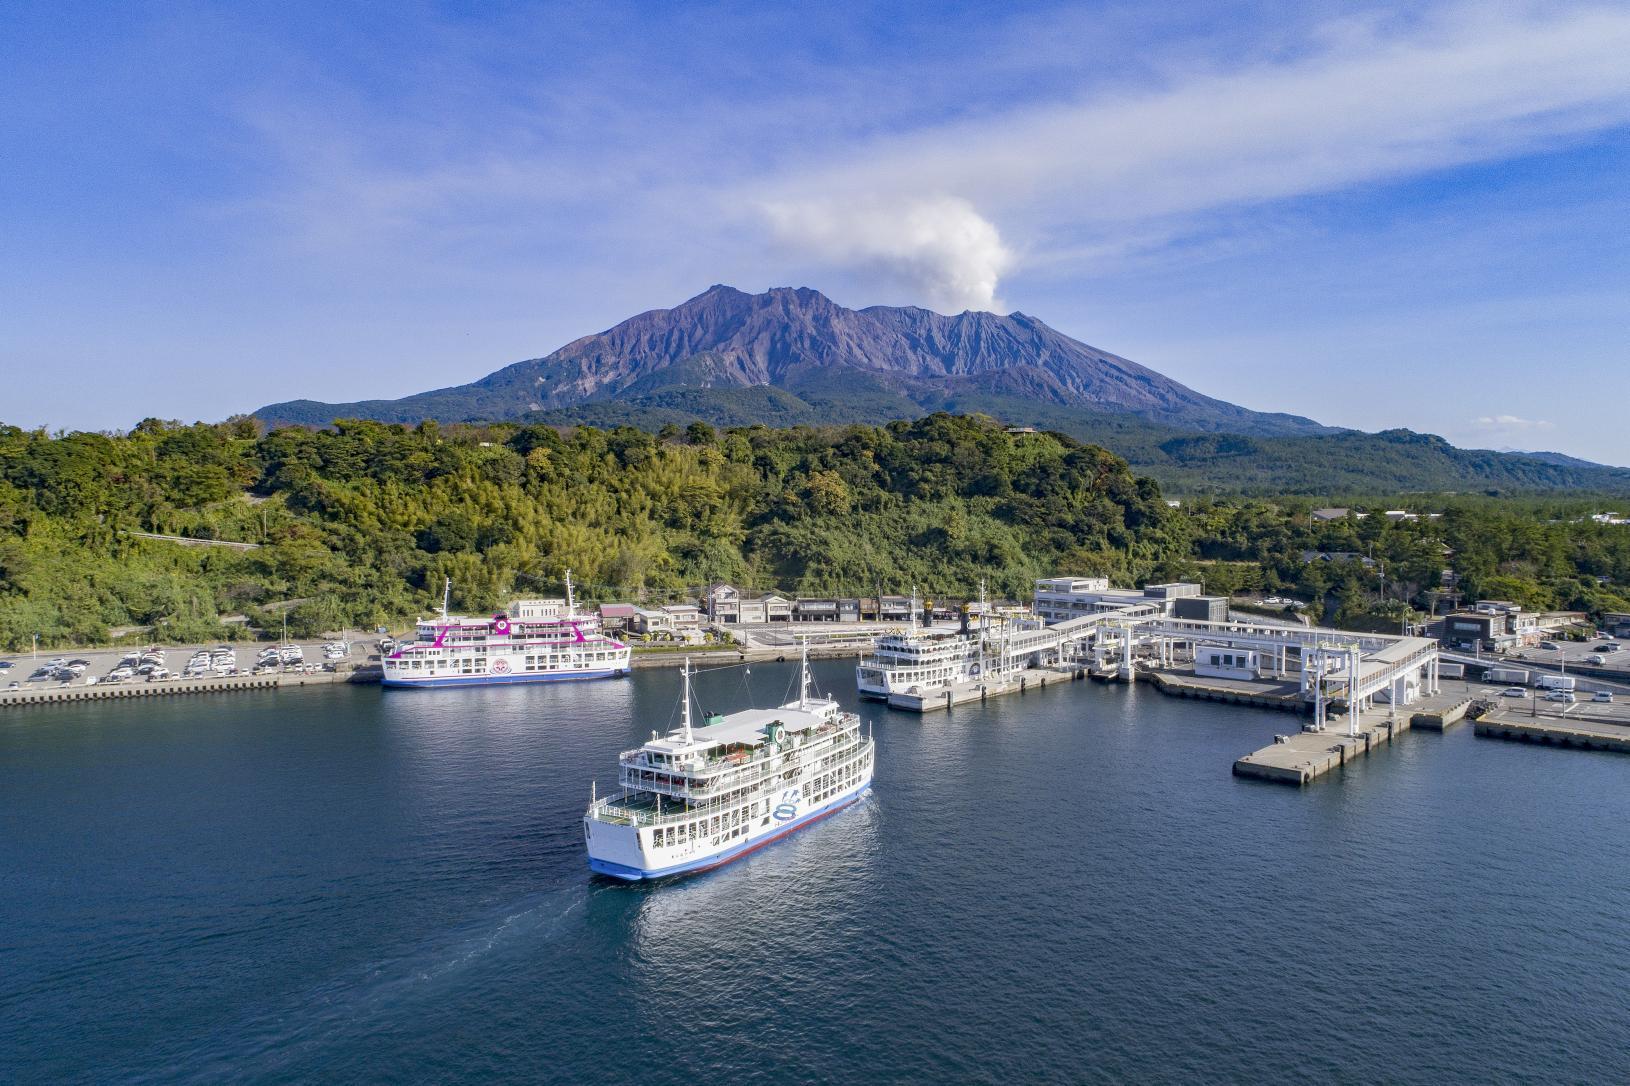 Top 5 famous spots of Sakurajima according to ANA cabin crew-0